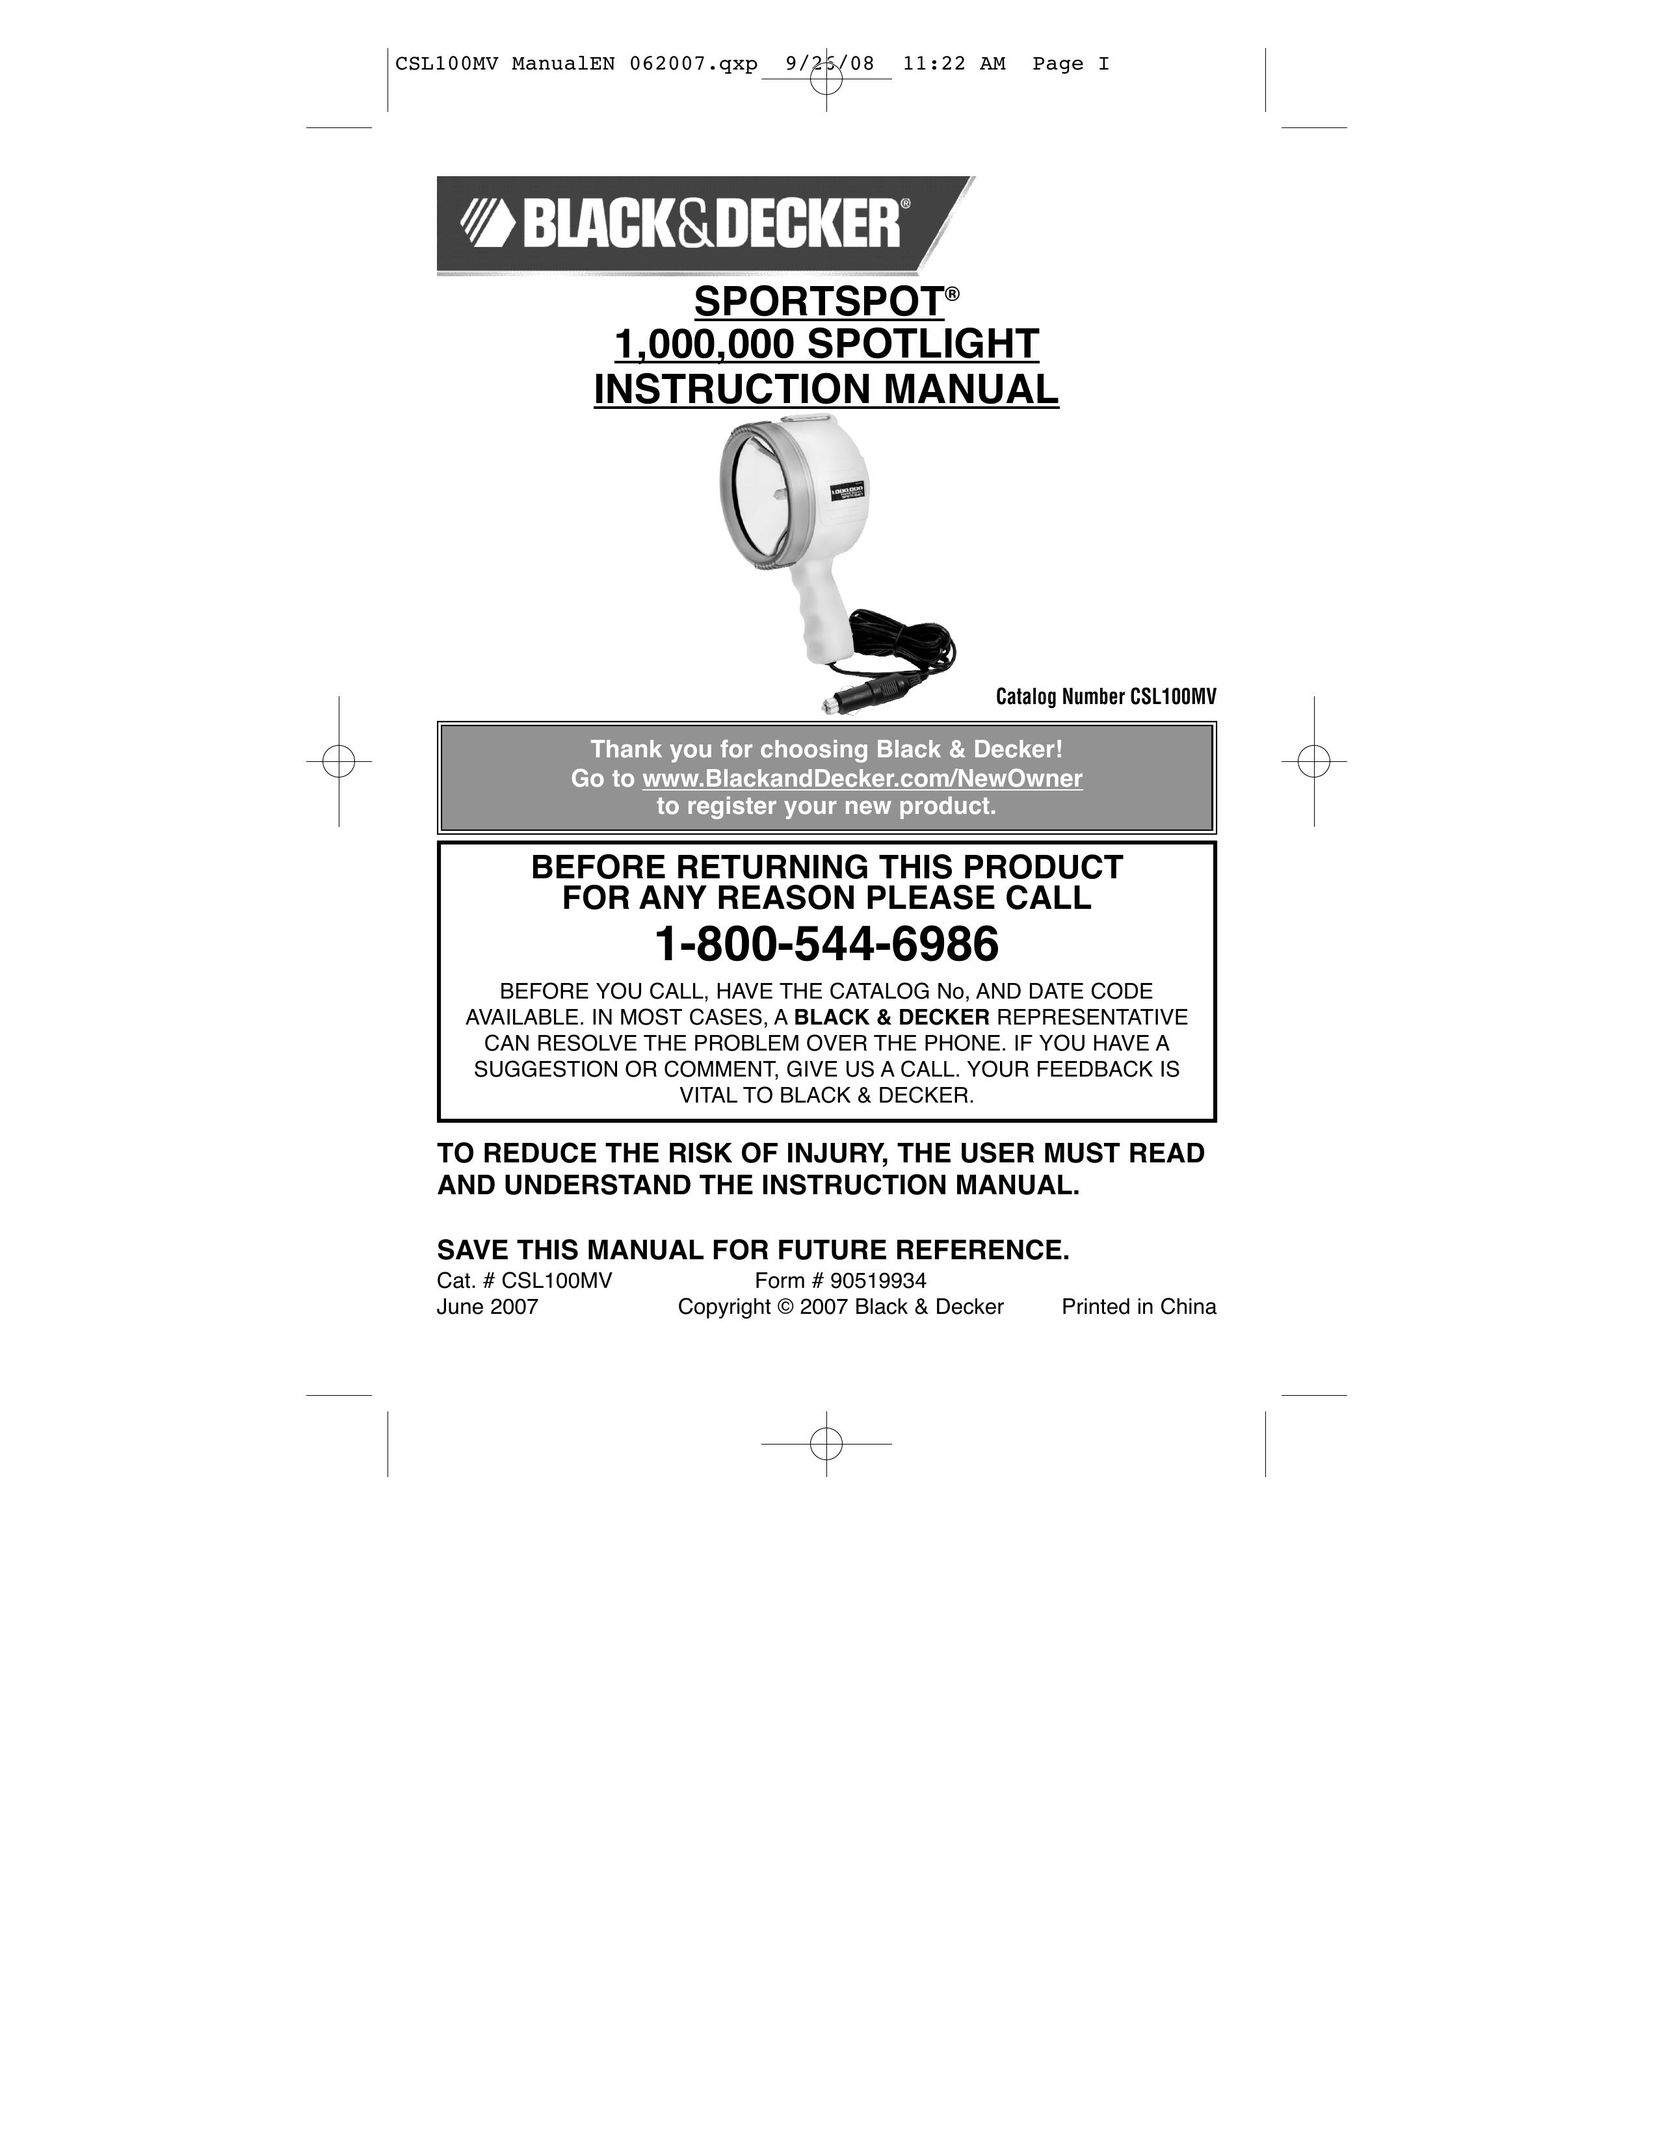 Black & Decker CSL100MV Work Light User Manual